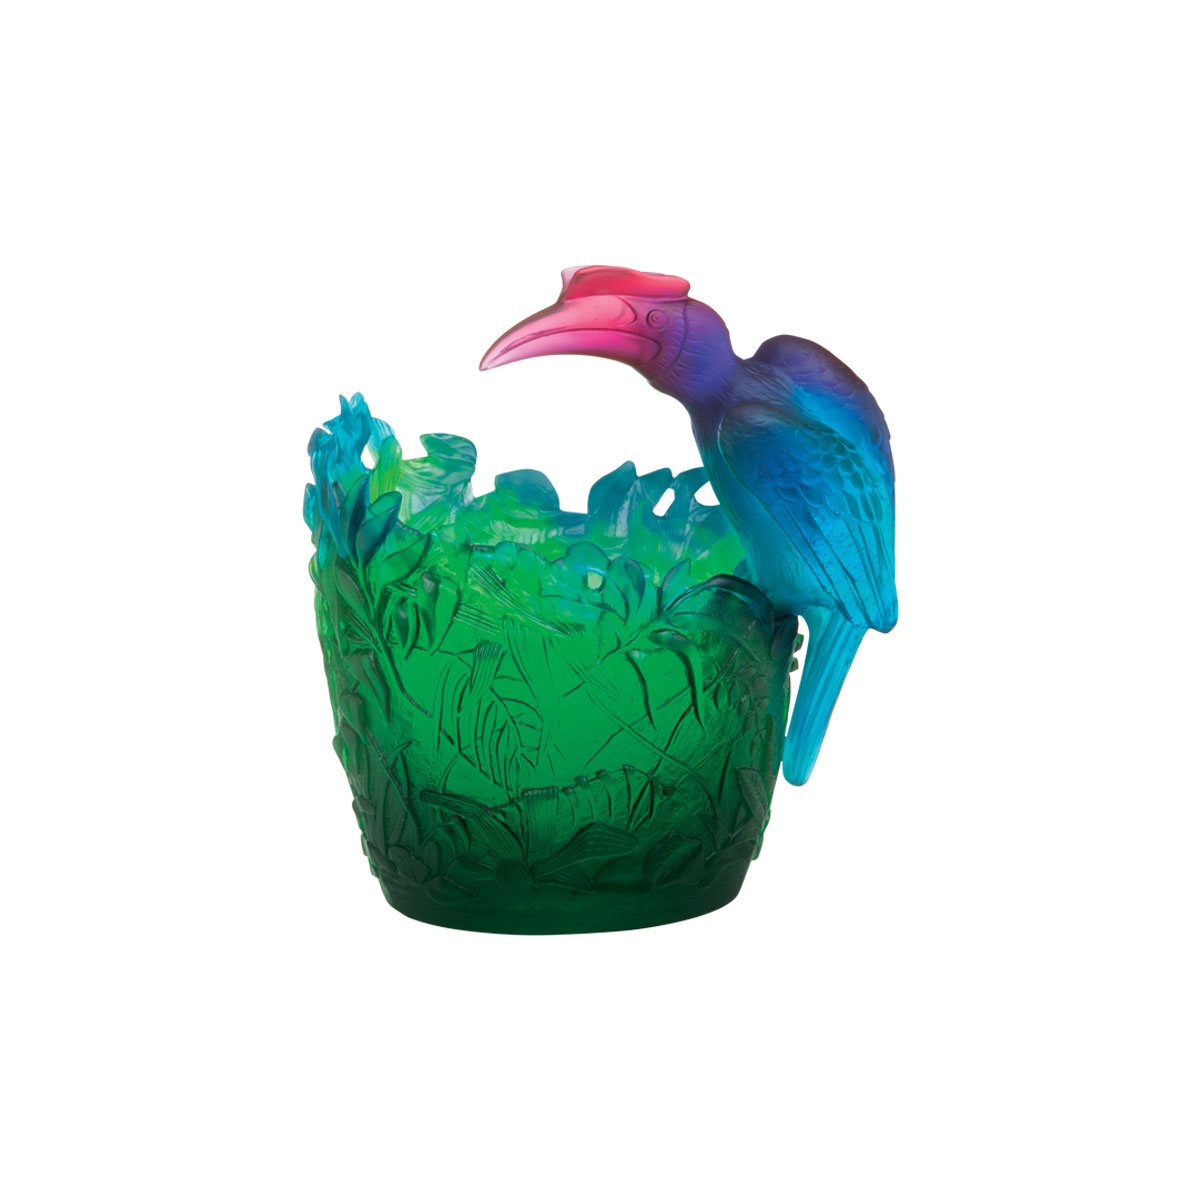 Daum Jungle Vase, Limited Edition